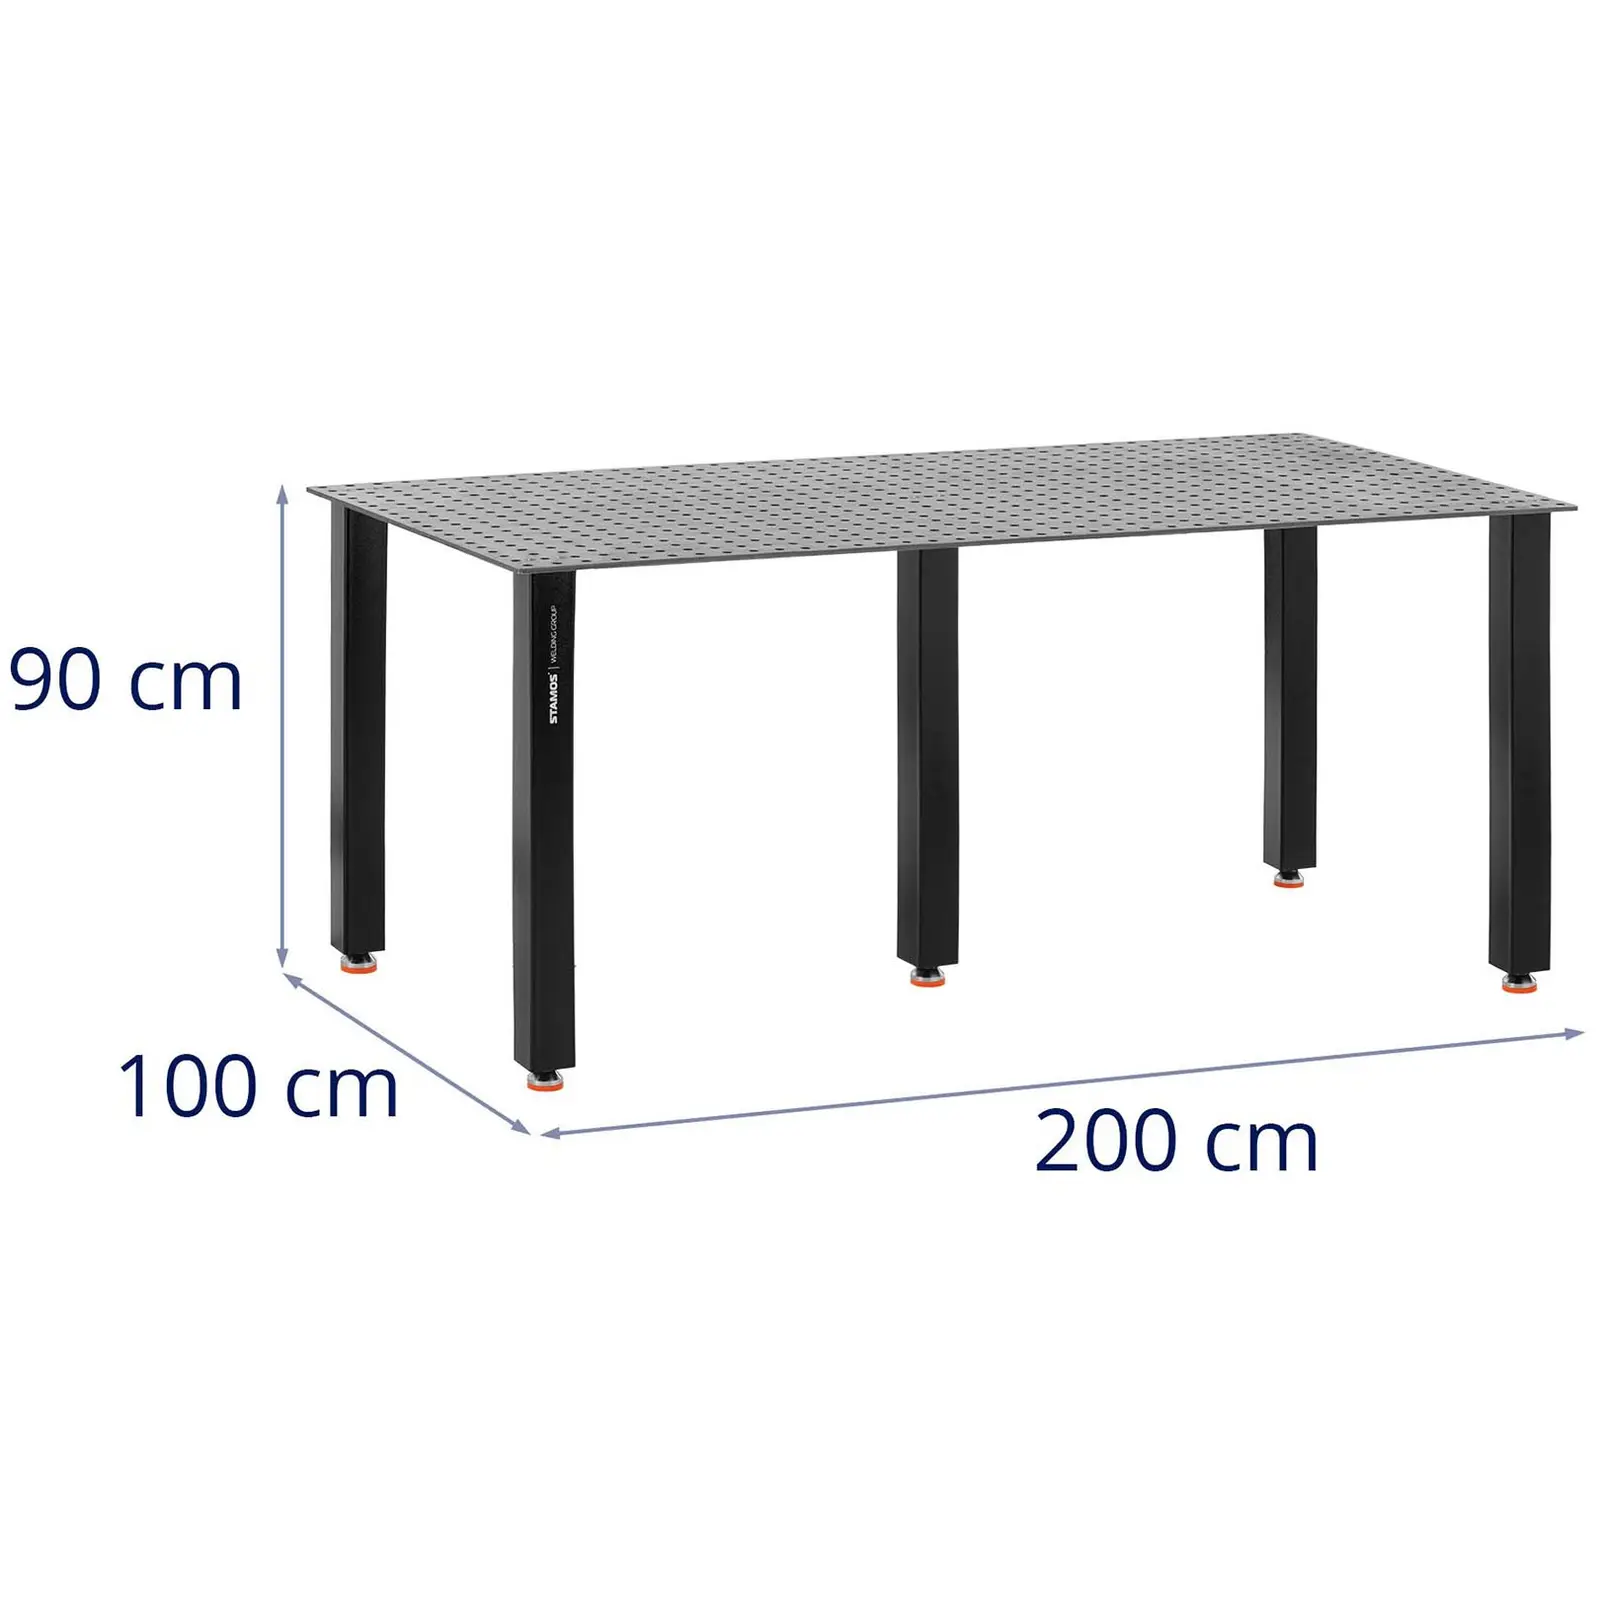 Sveisebord - 250 kg - 200 x 100 cm